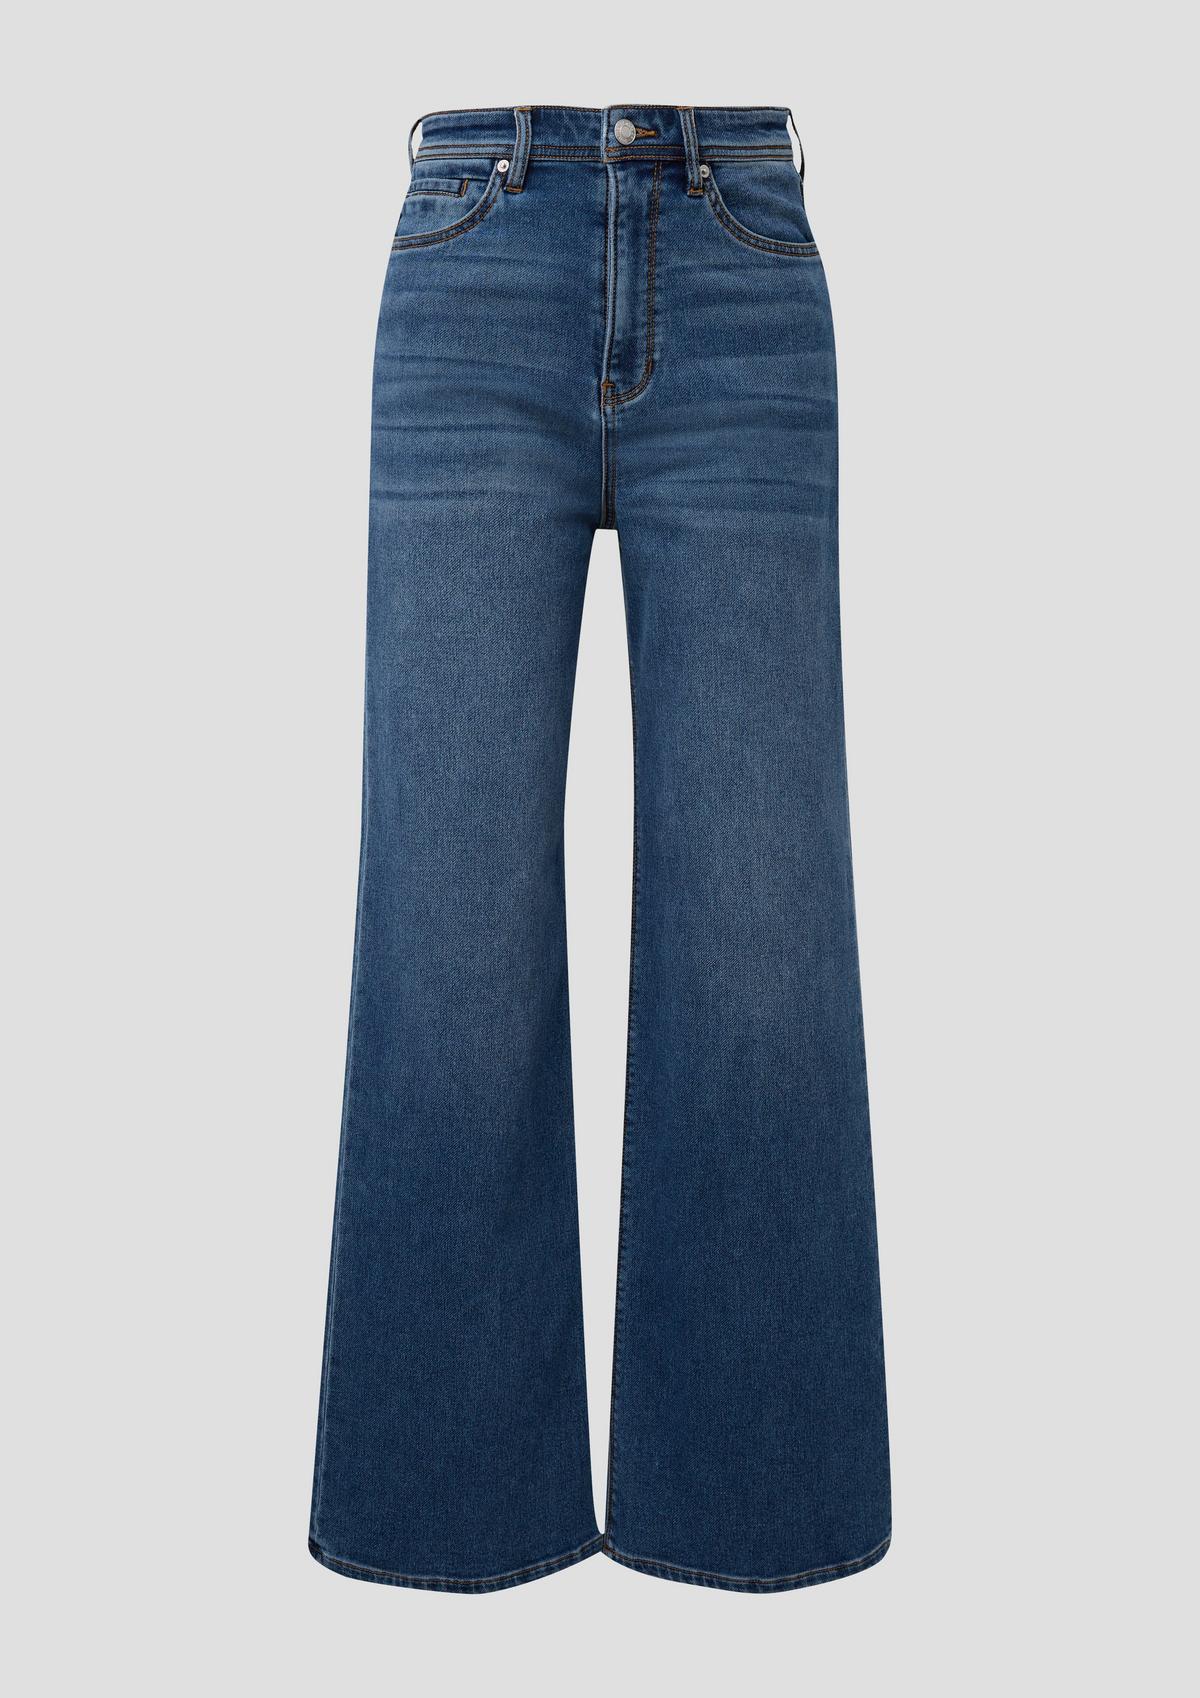 s.Oliver Suri jeans / regular fit / high rise / wide leg / katoenmix